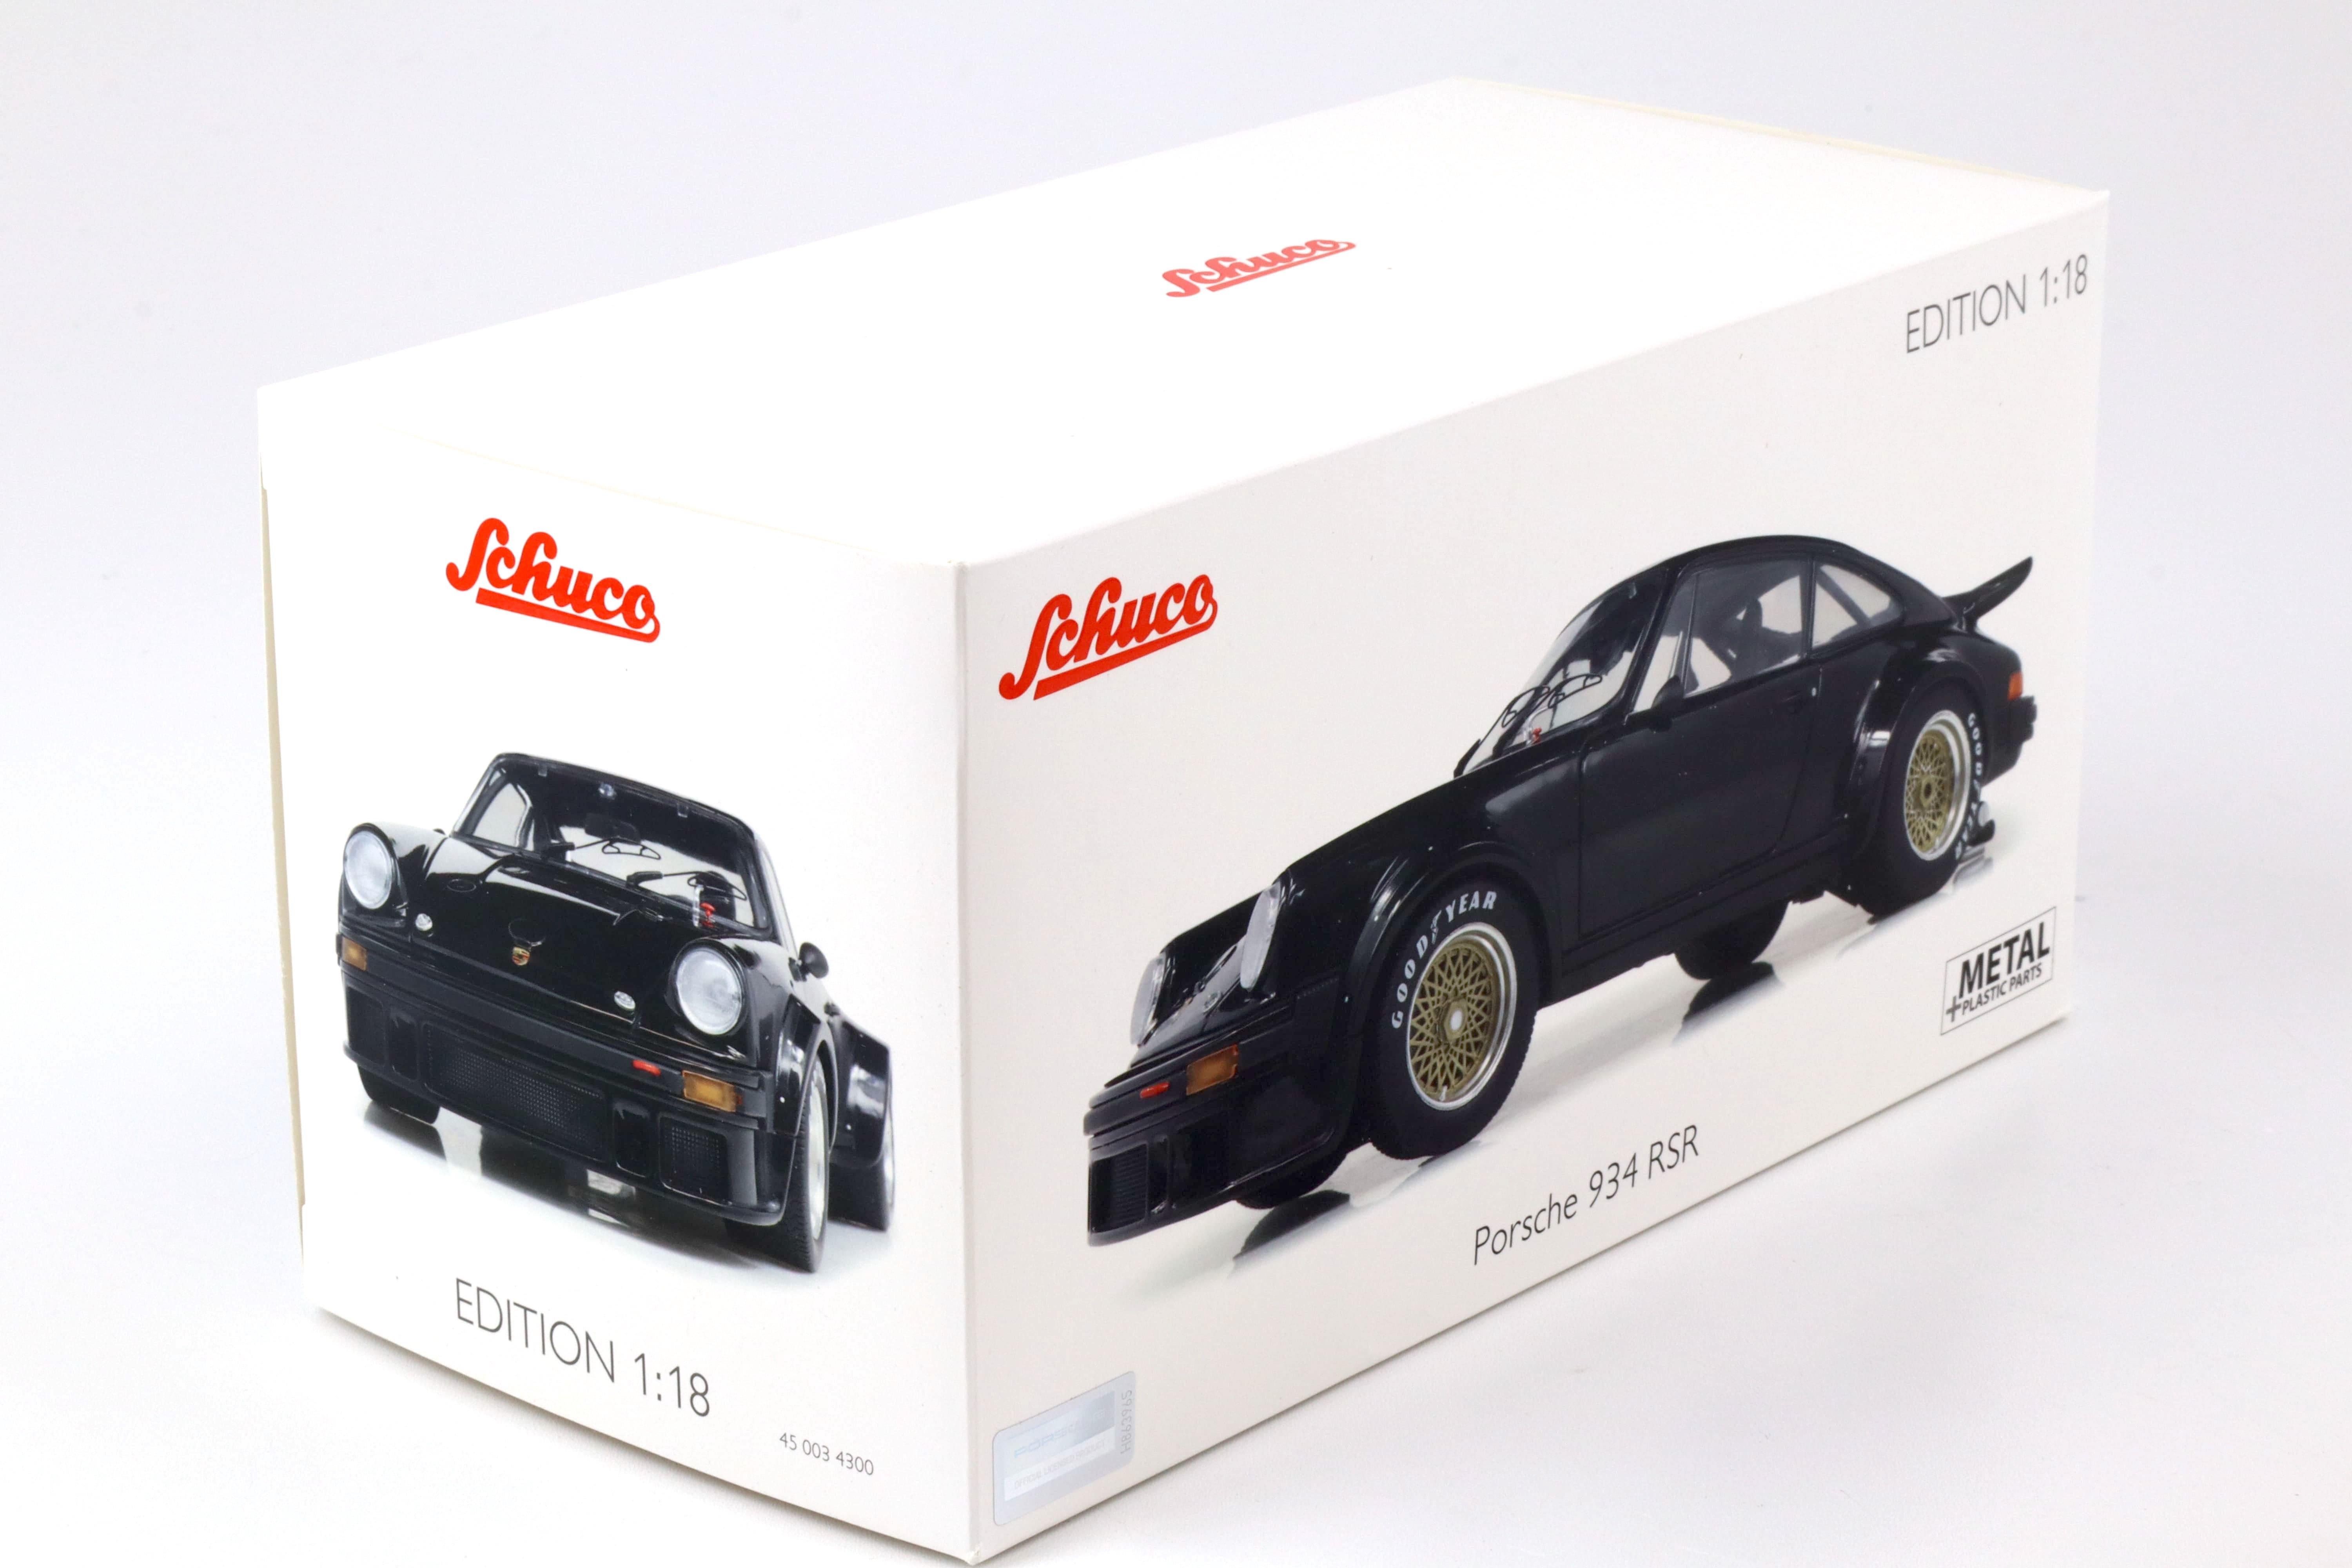 1:18 Schuco Porsche 934 RSR Street plain black